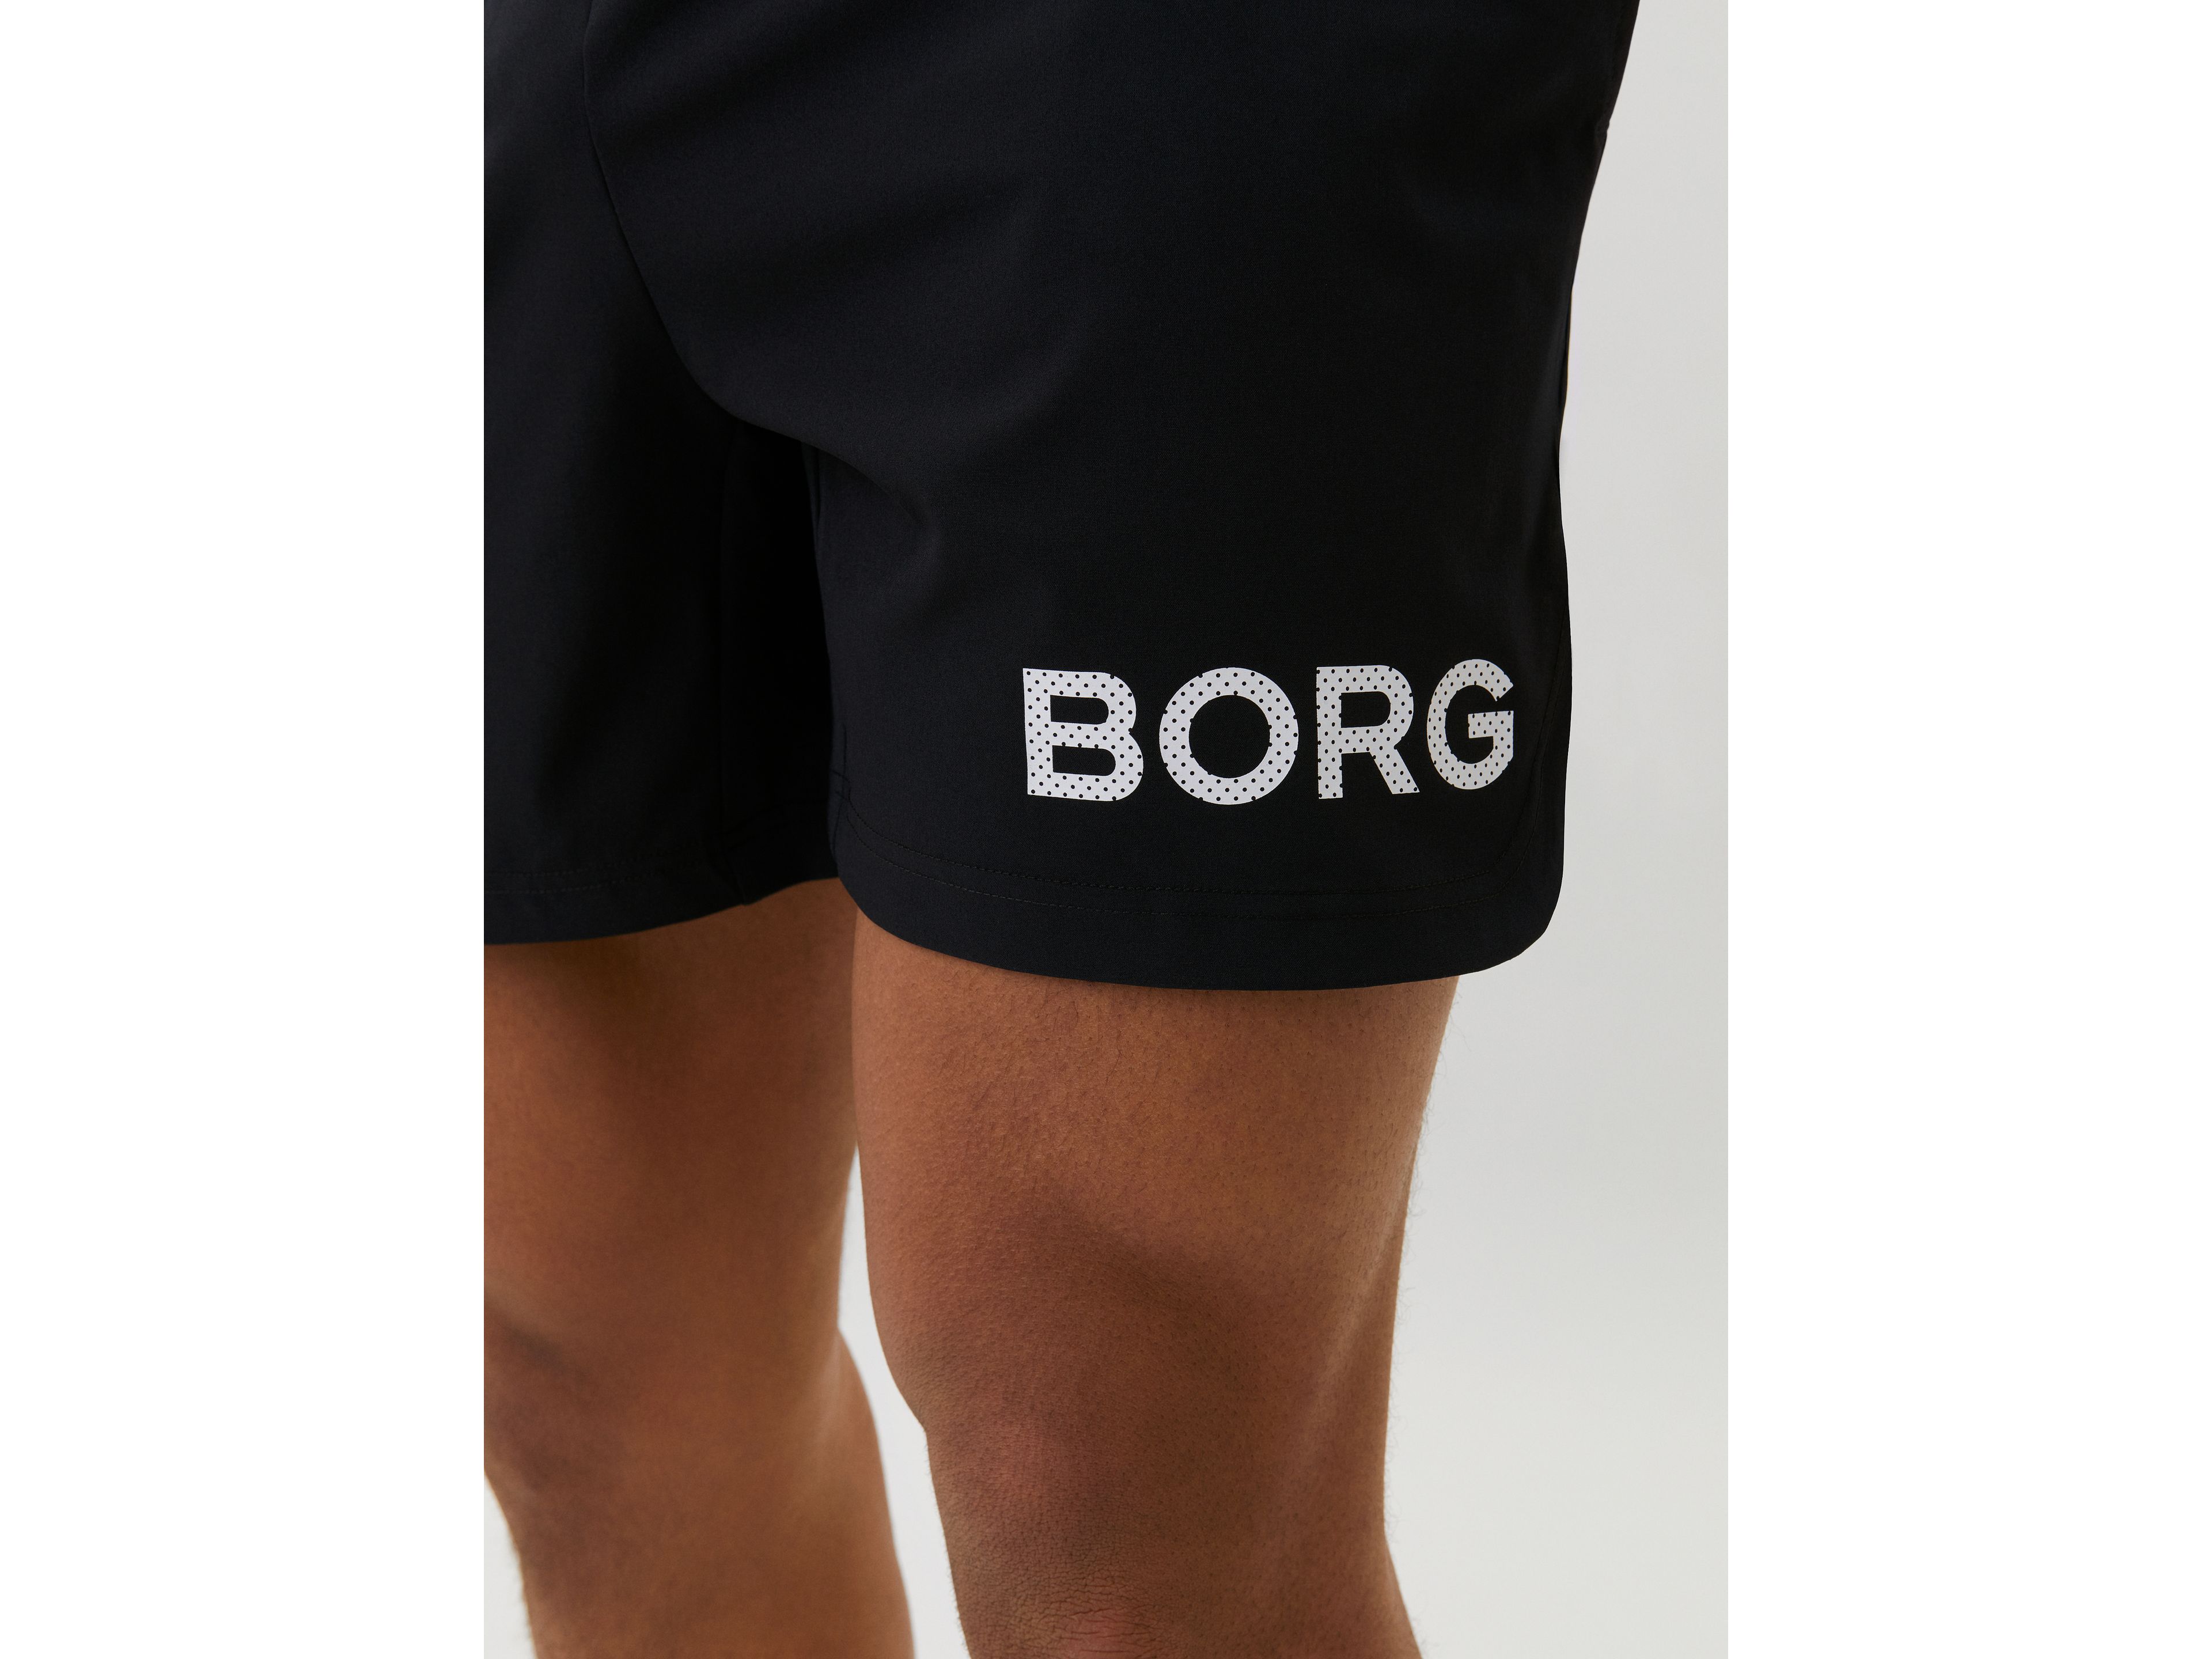 bjorn-borg-shorts-heren